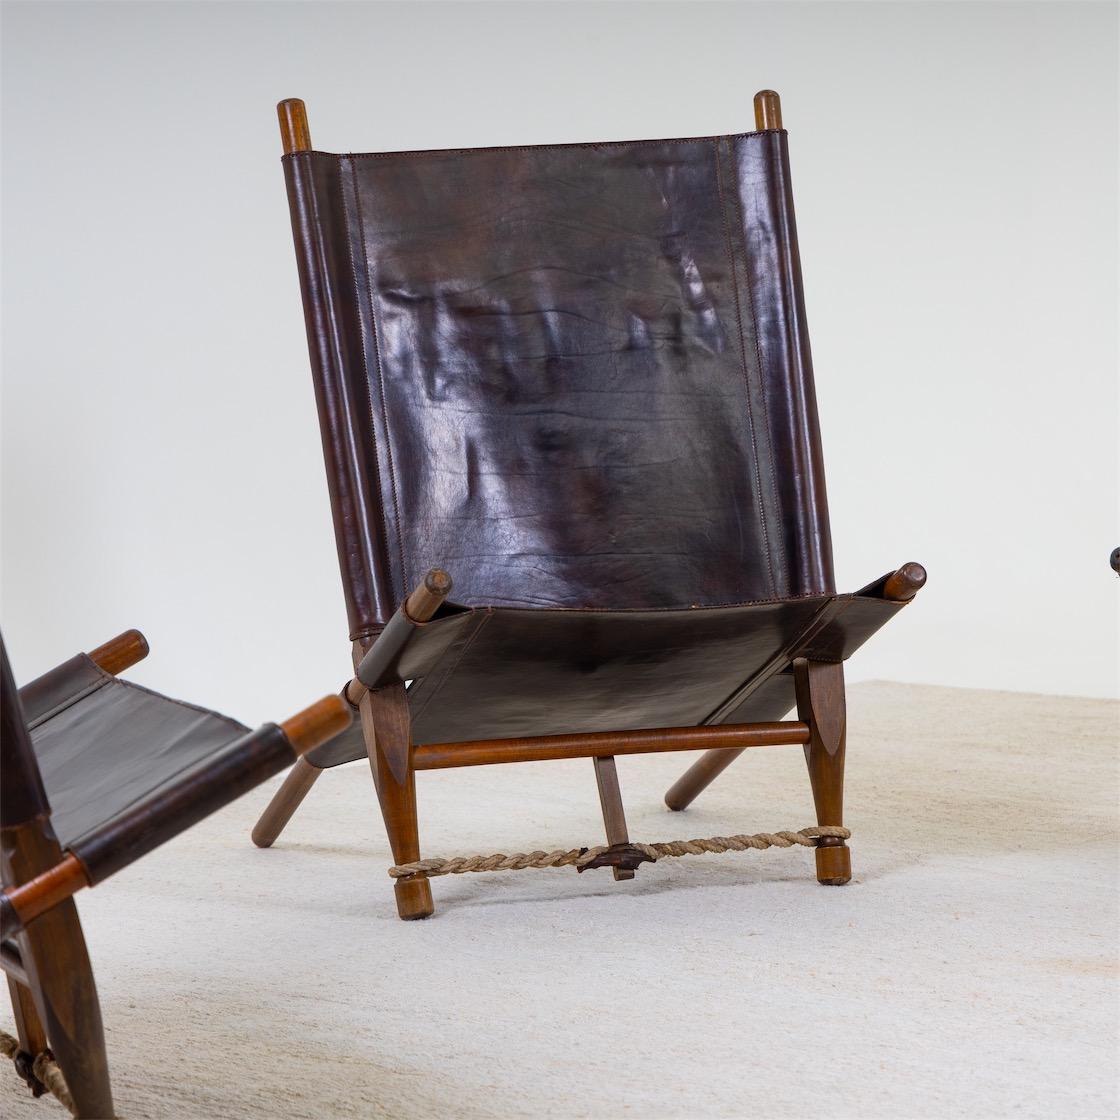 Danish Saw Lounge Chairs by Ole Gjerlov-Knudsen for Cado, Denmark, 1958